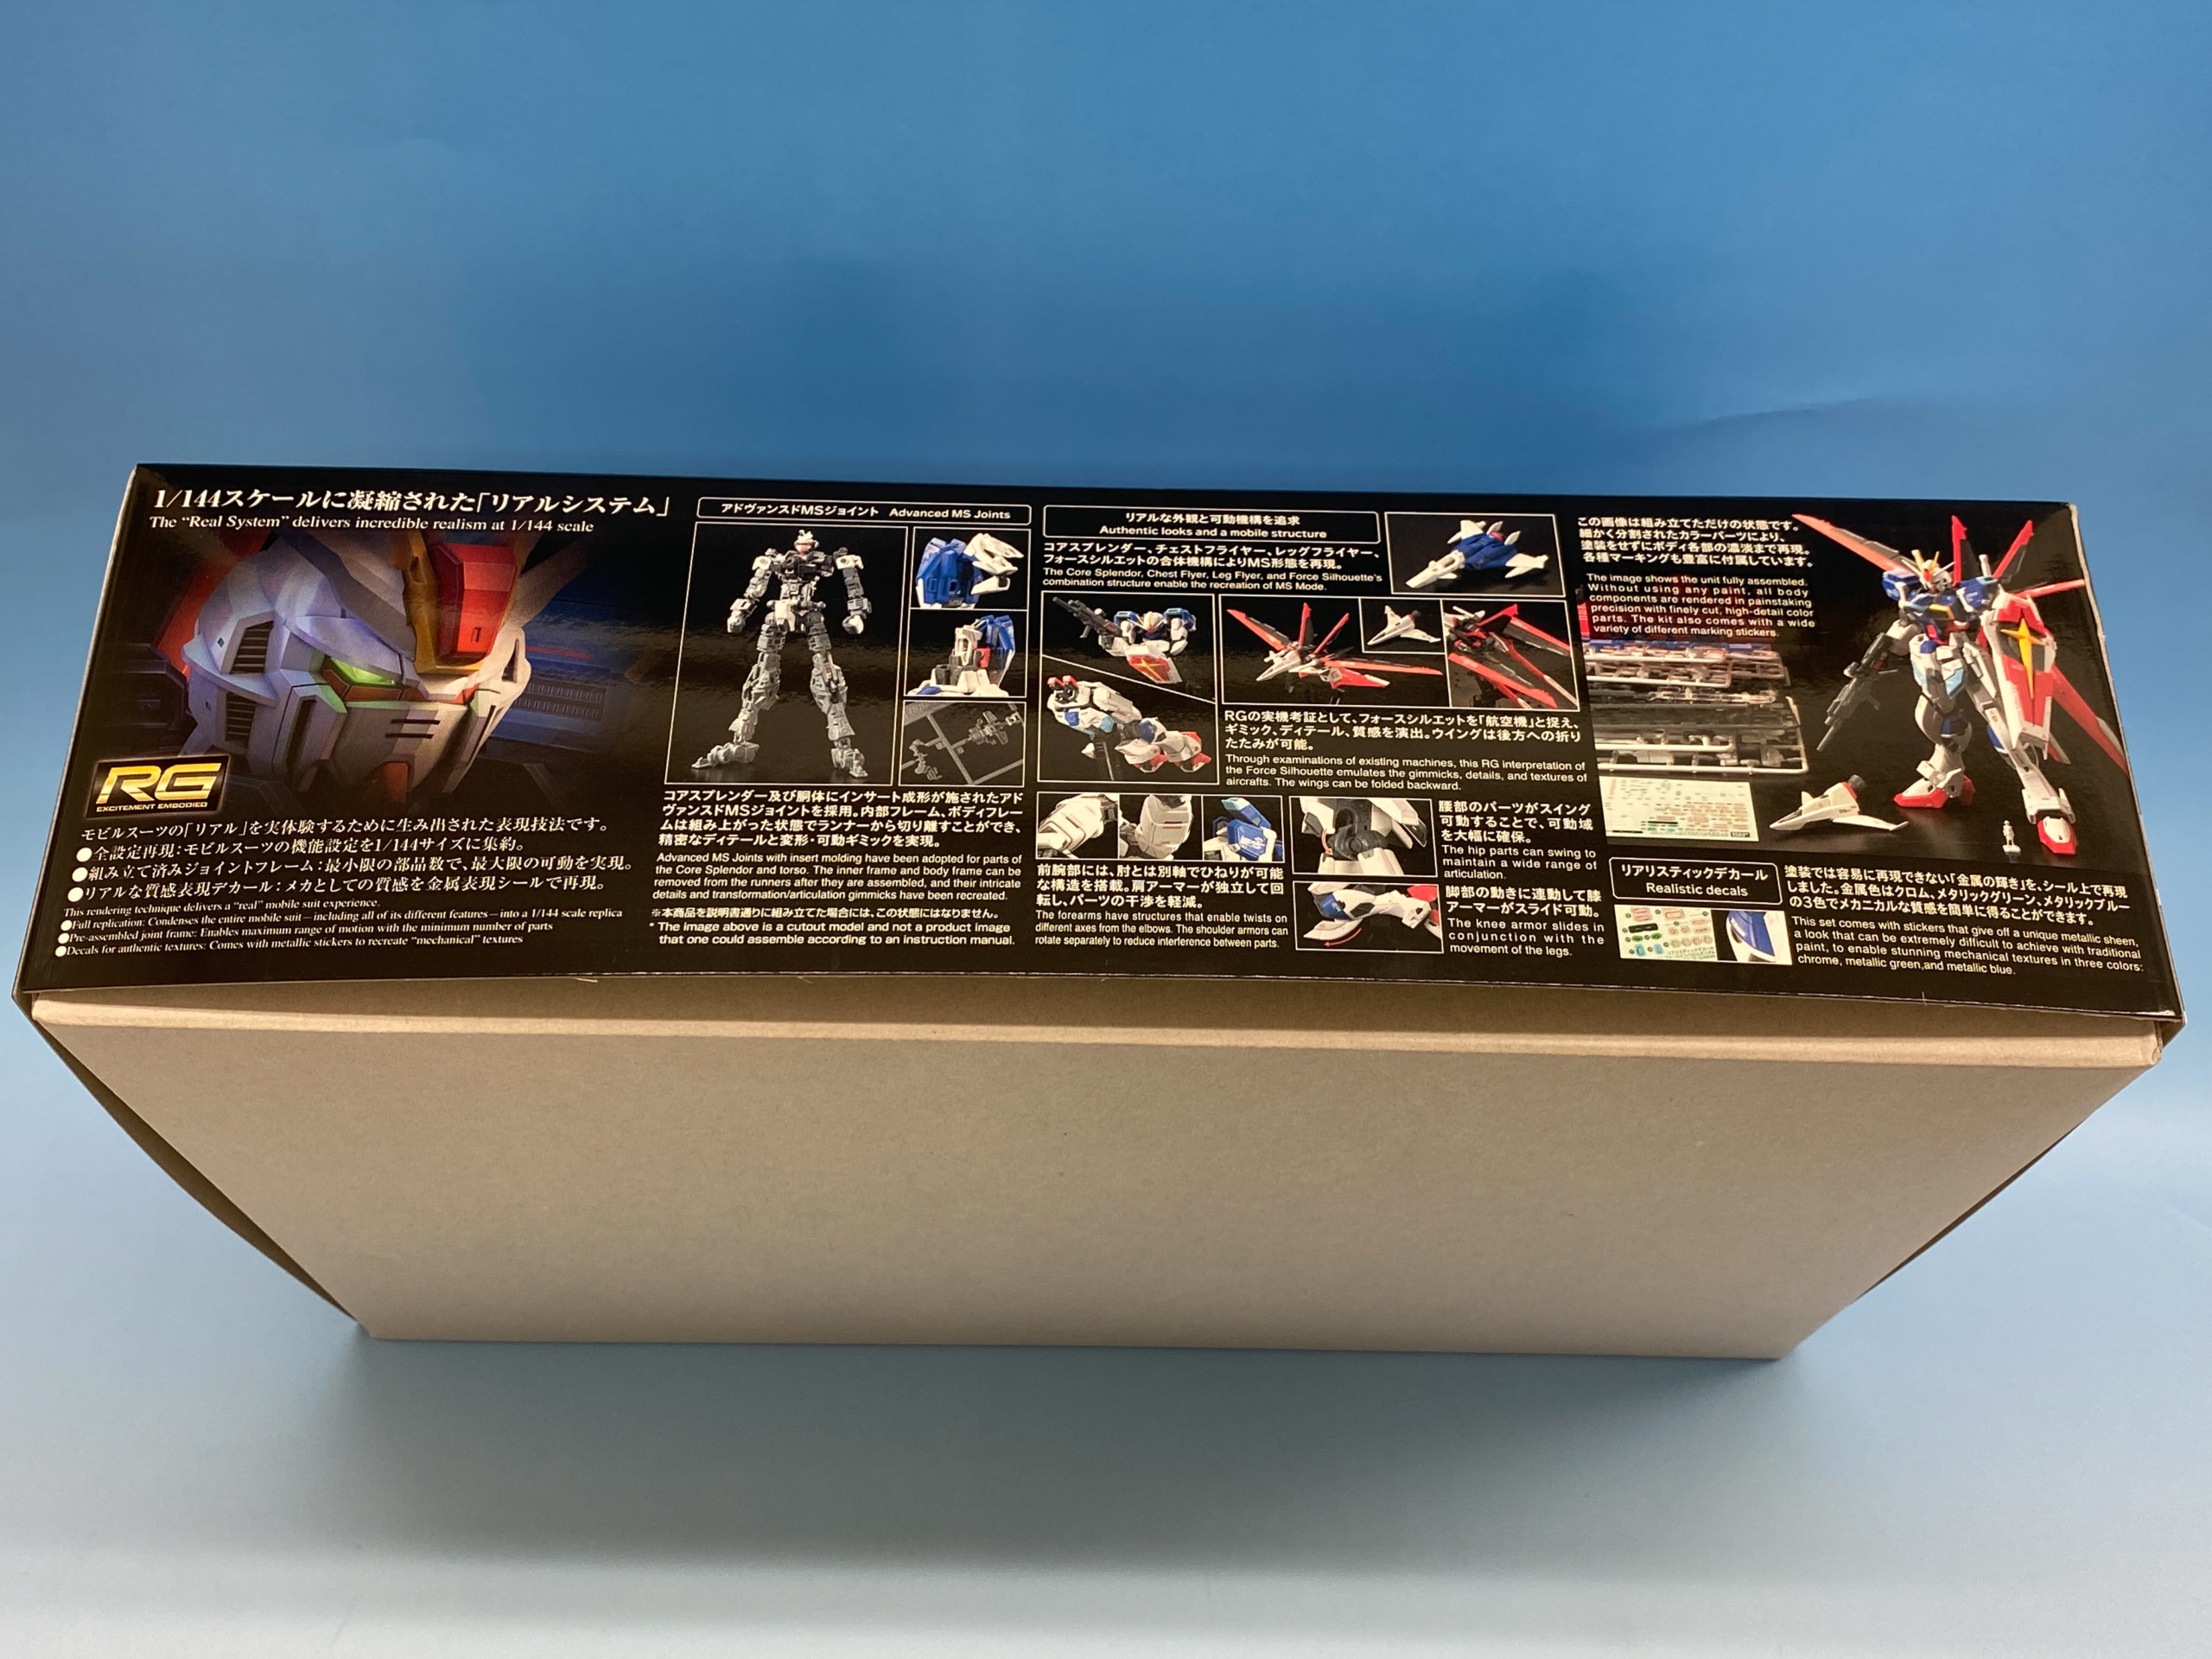 1/144 RG Force Impulse Gundam